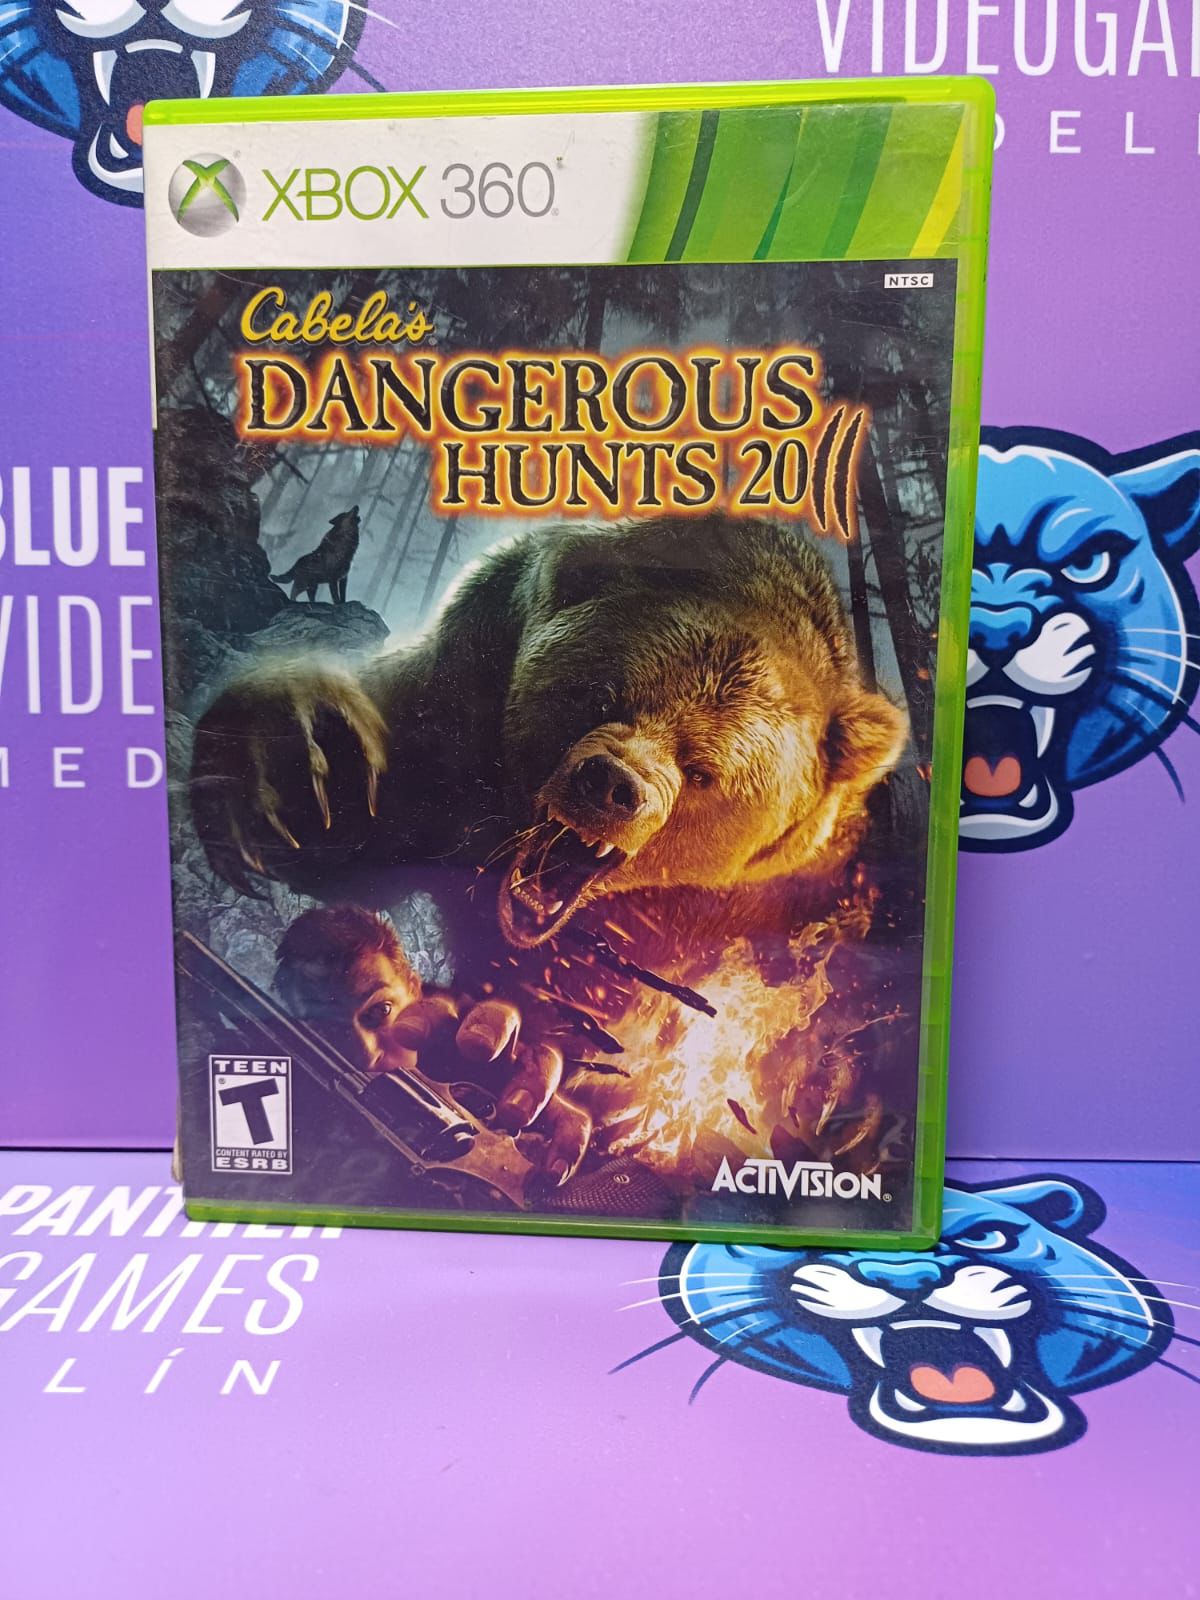 Dangerous hunts 2011 - Xbox 360